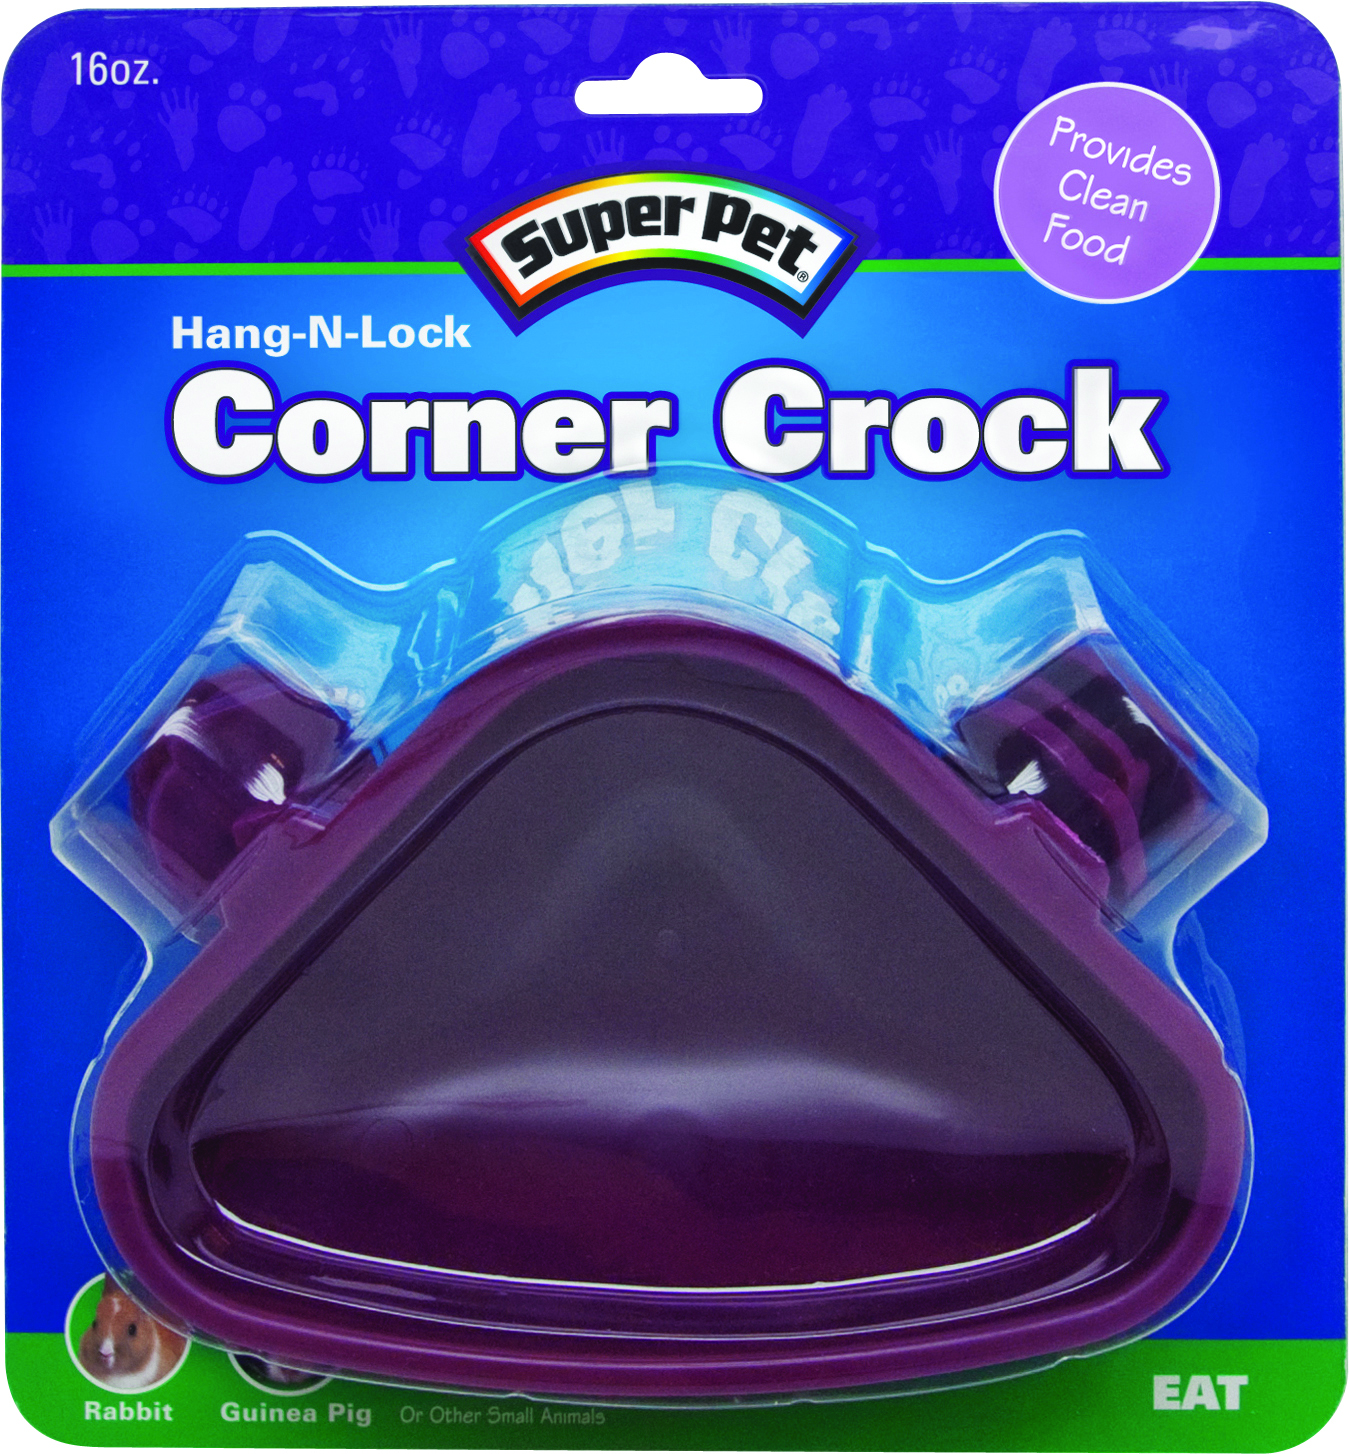 Hang-N-Lock Corner Crock